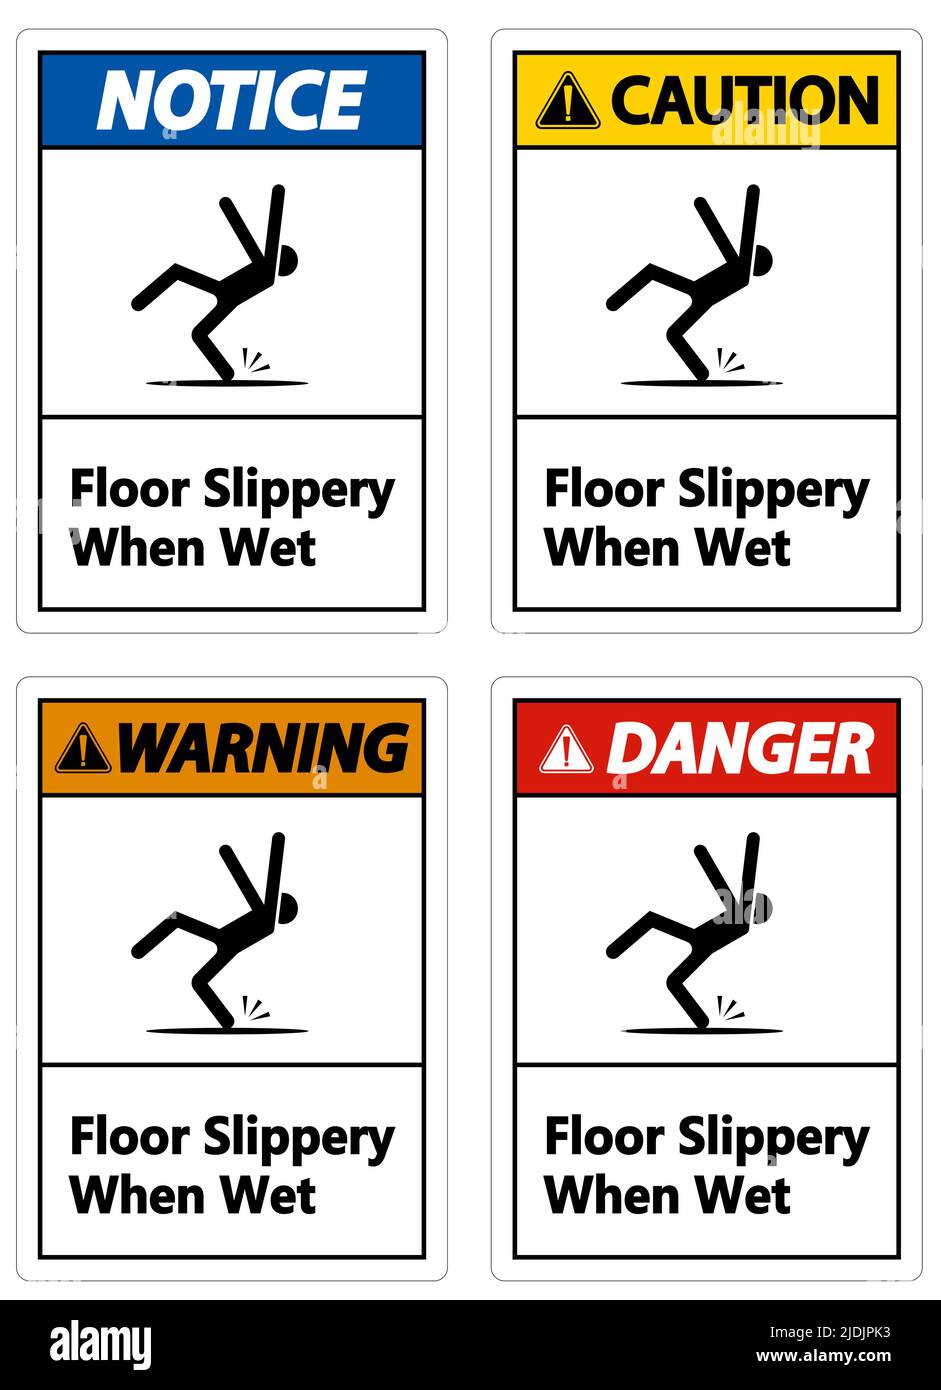 Warning Slippery When Wet Sign on white background Stock Vector